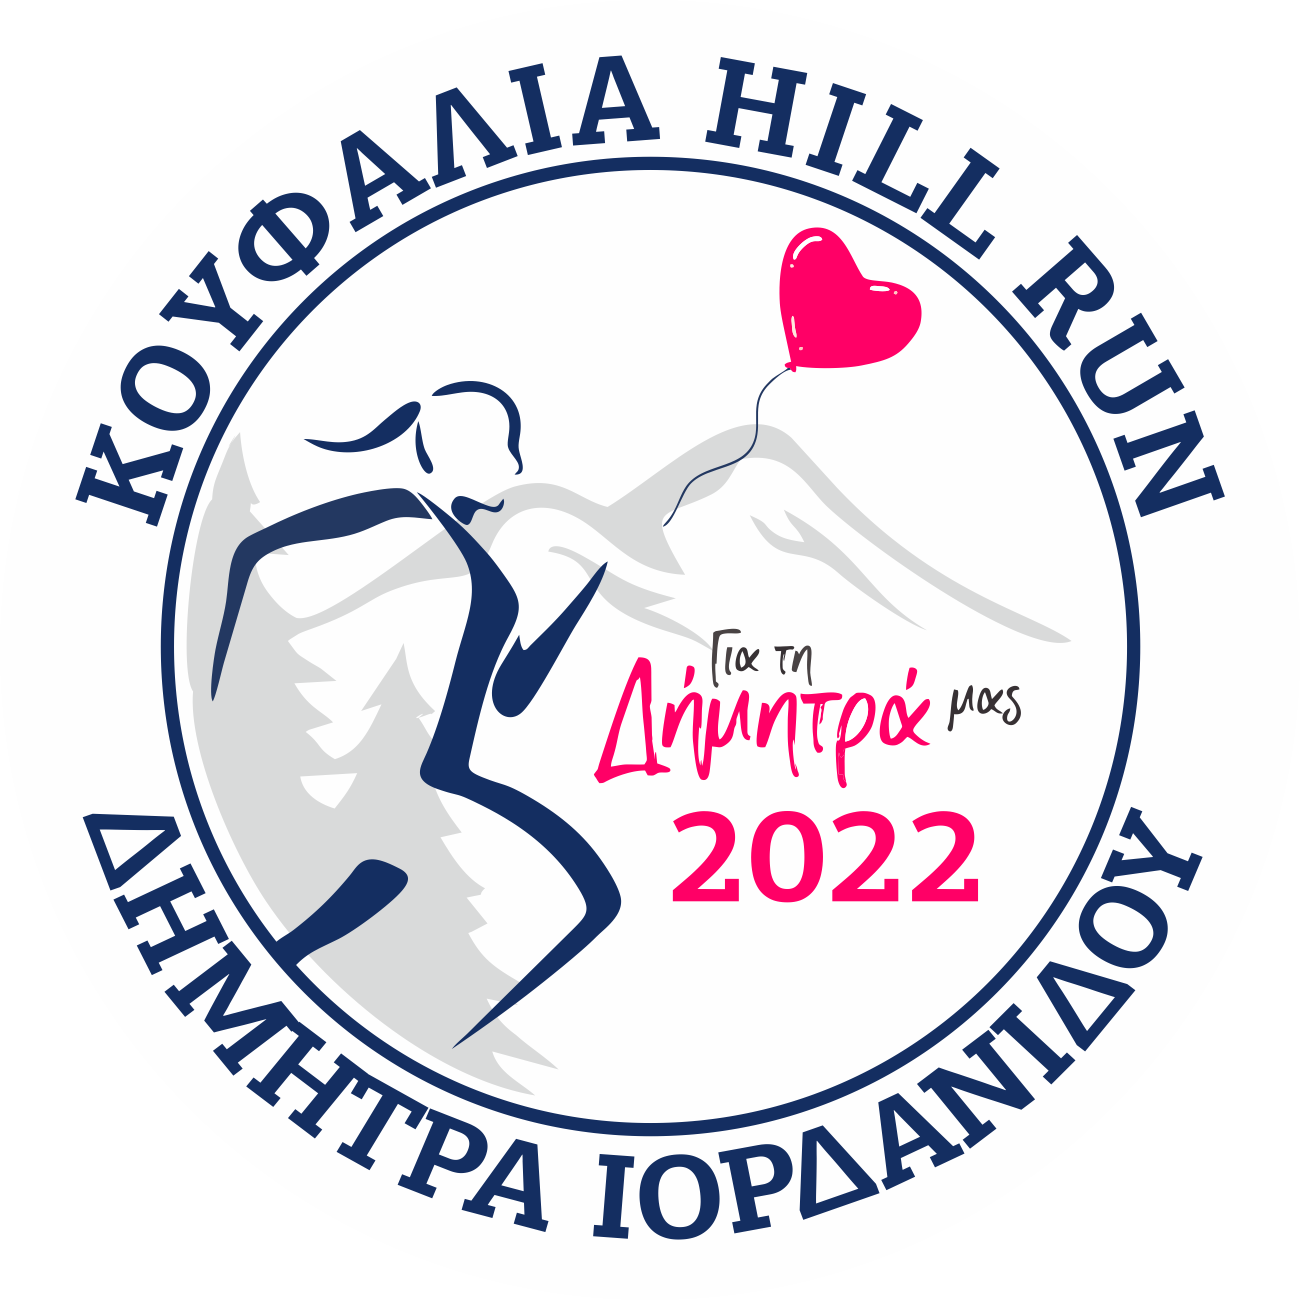 Featured image for “Koufalia Hill Run Δήμητρα Ιορδανίδου 2022”